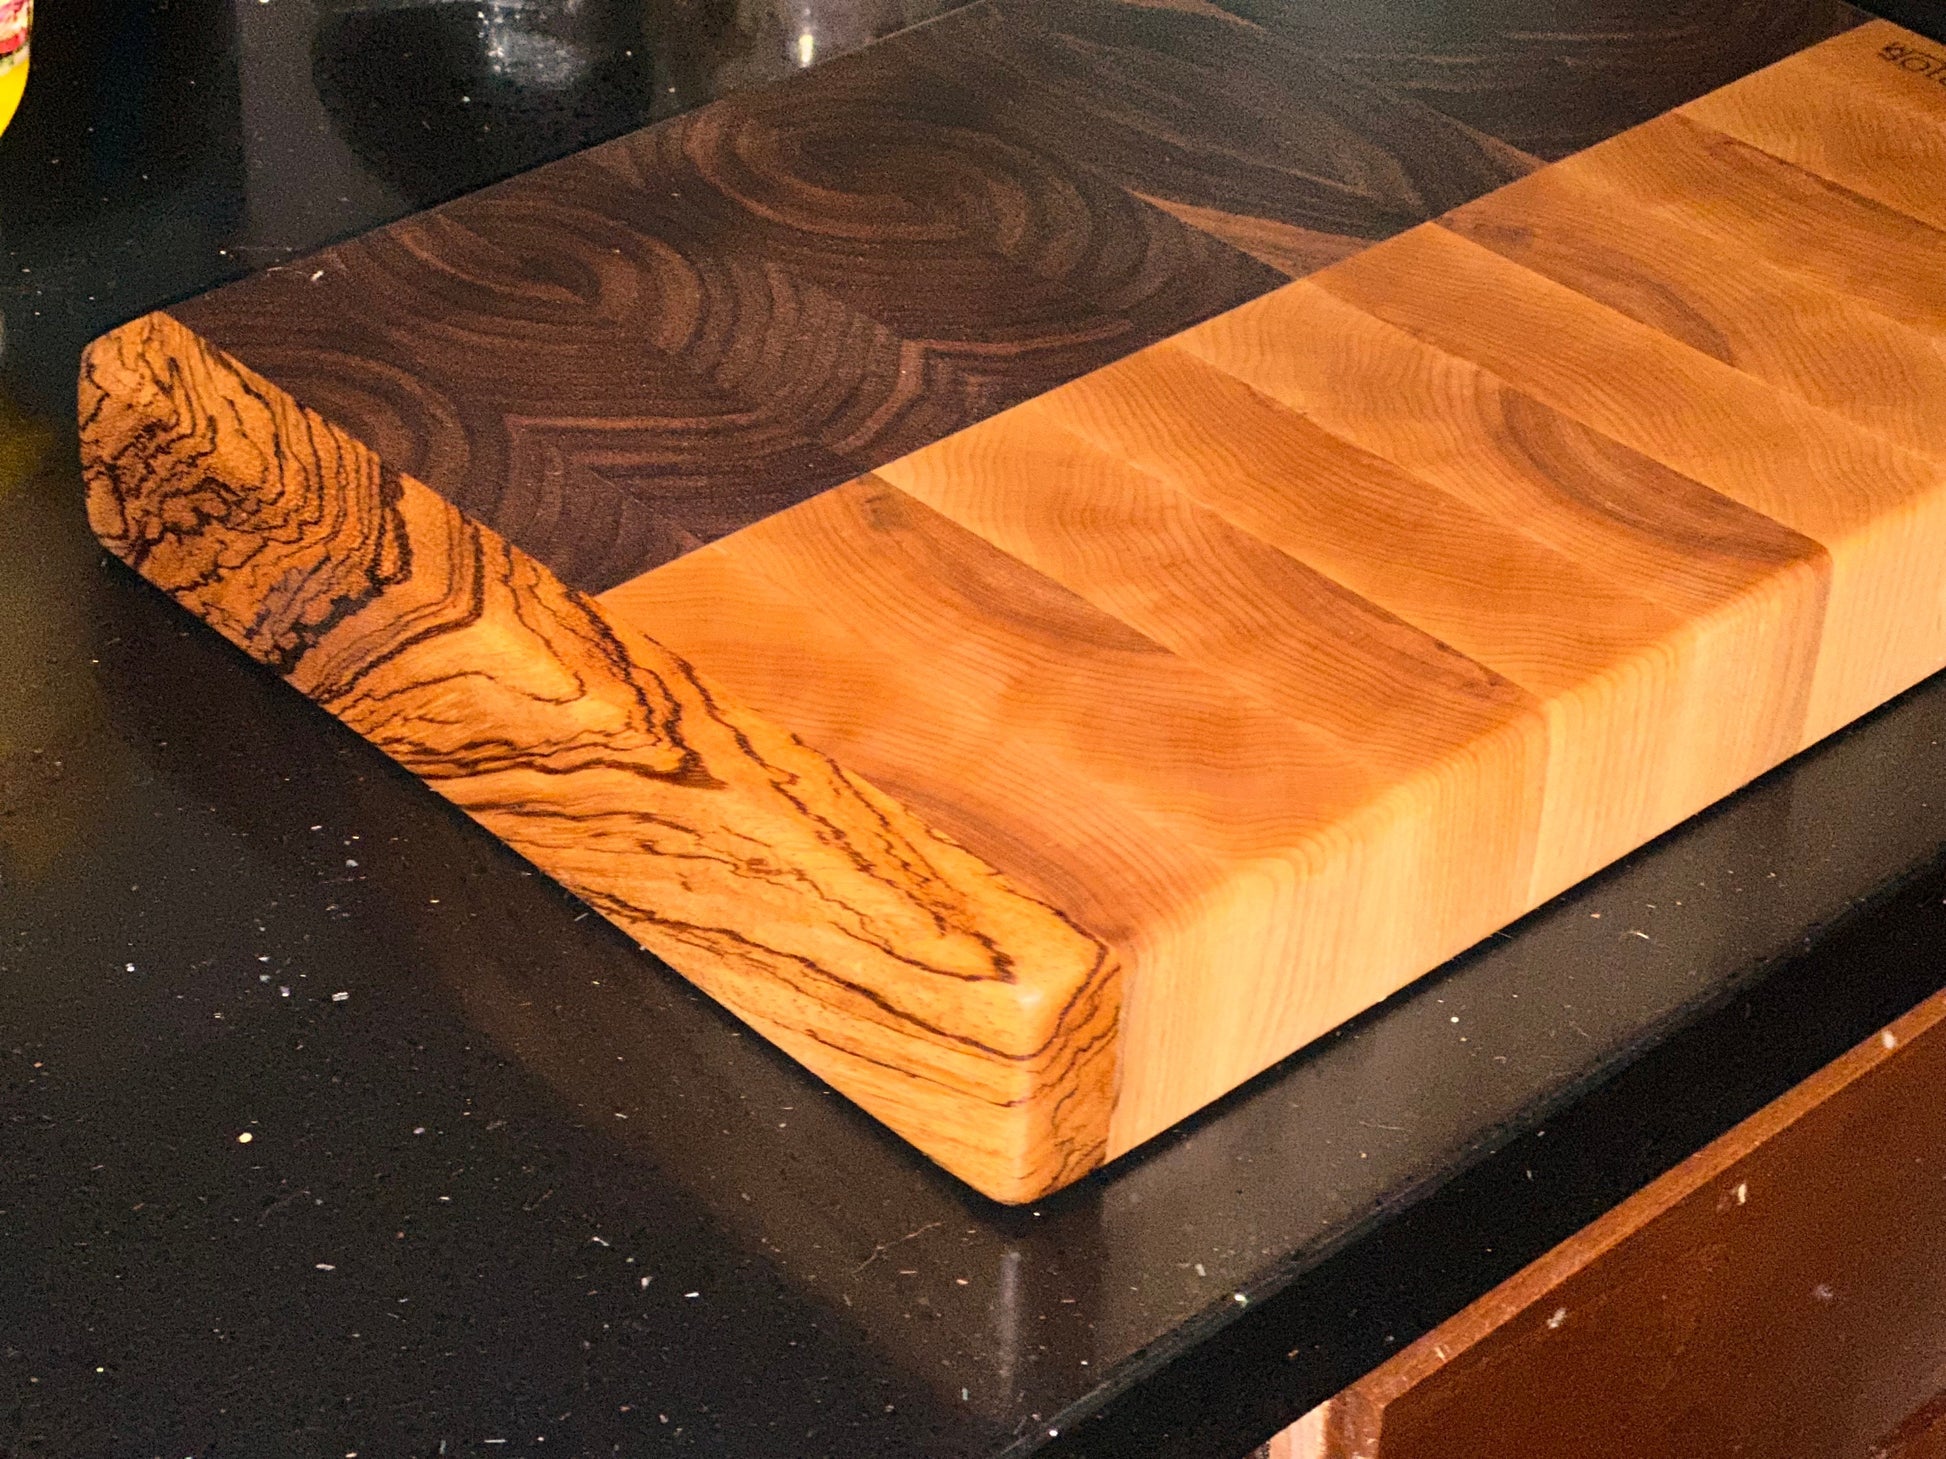 Cherry Wood Edge Grain Cutting Board Handmade in the USA